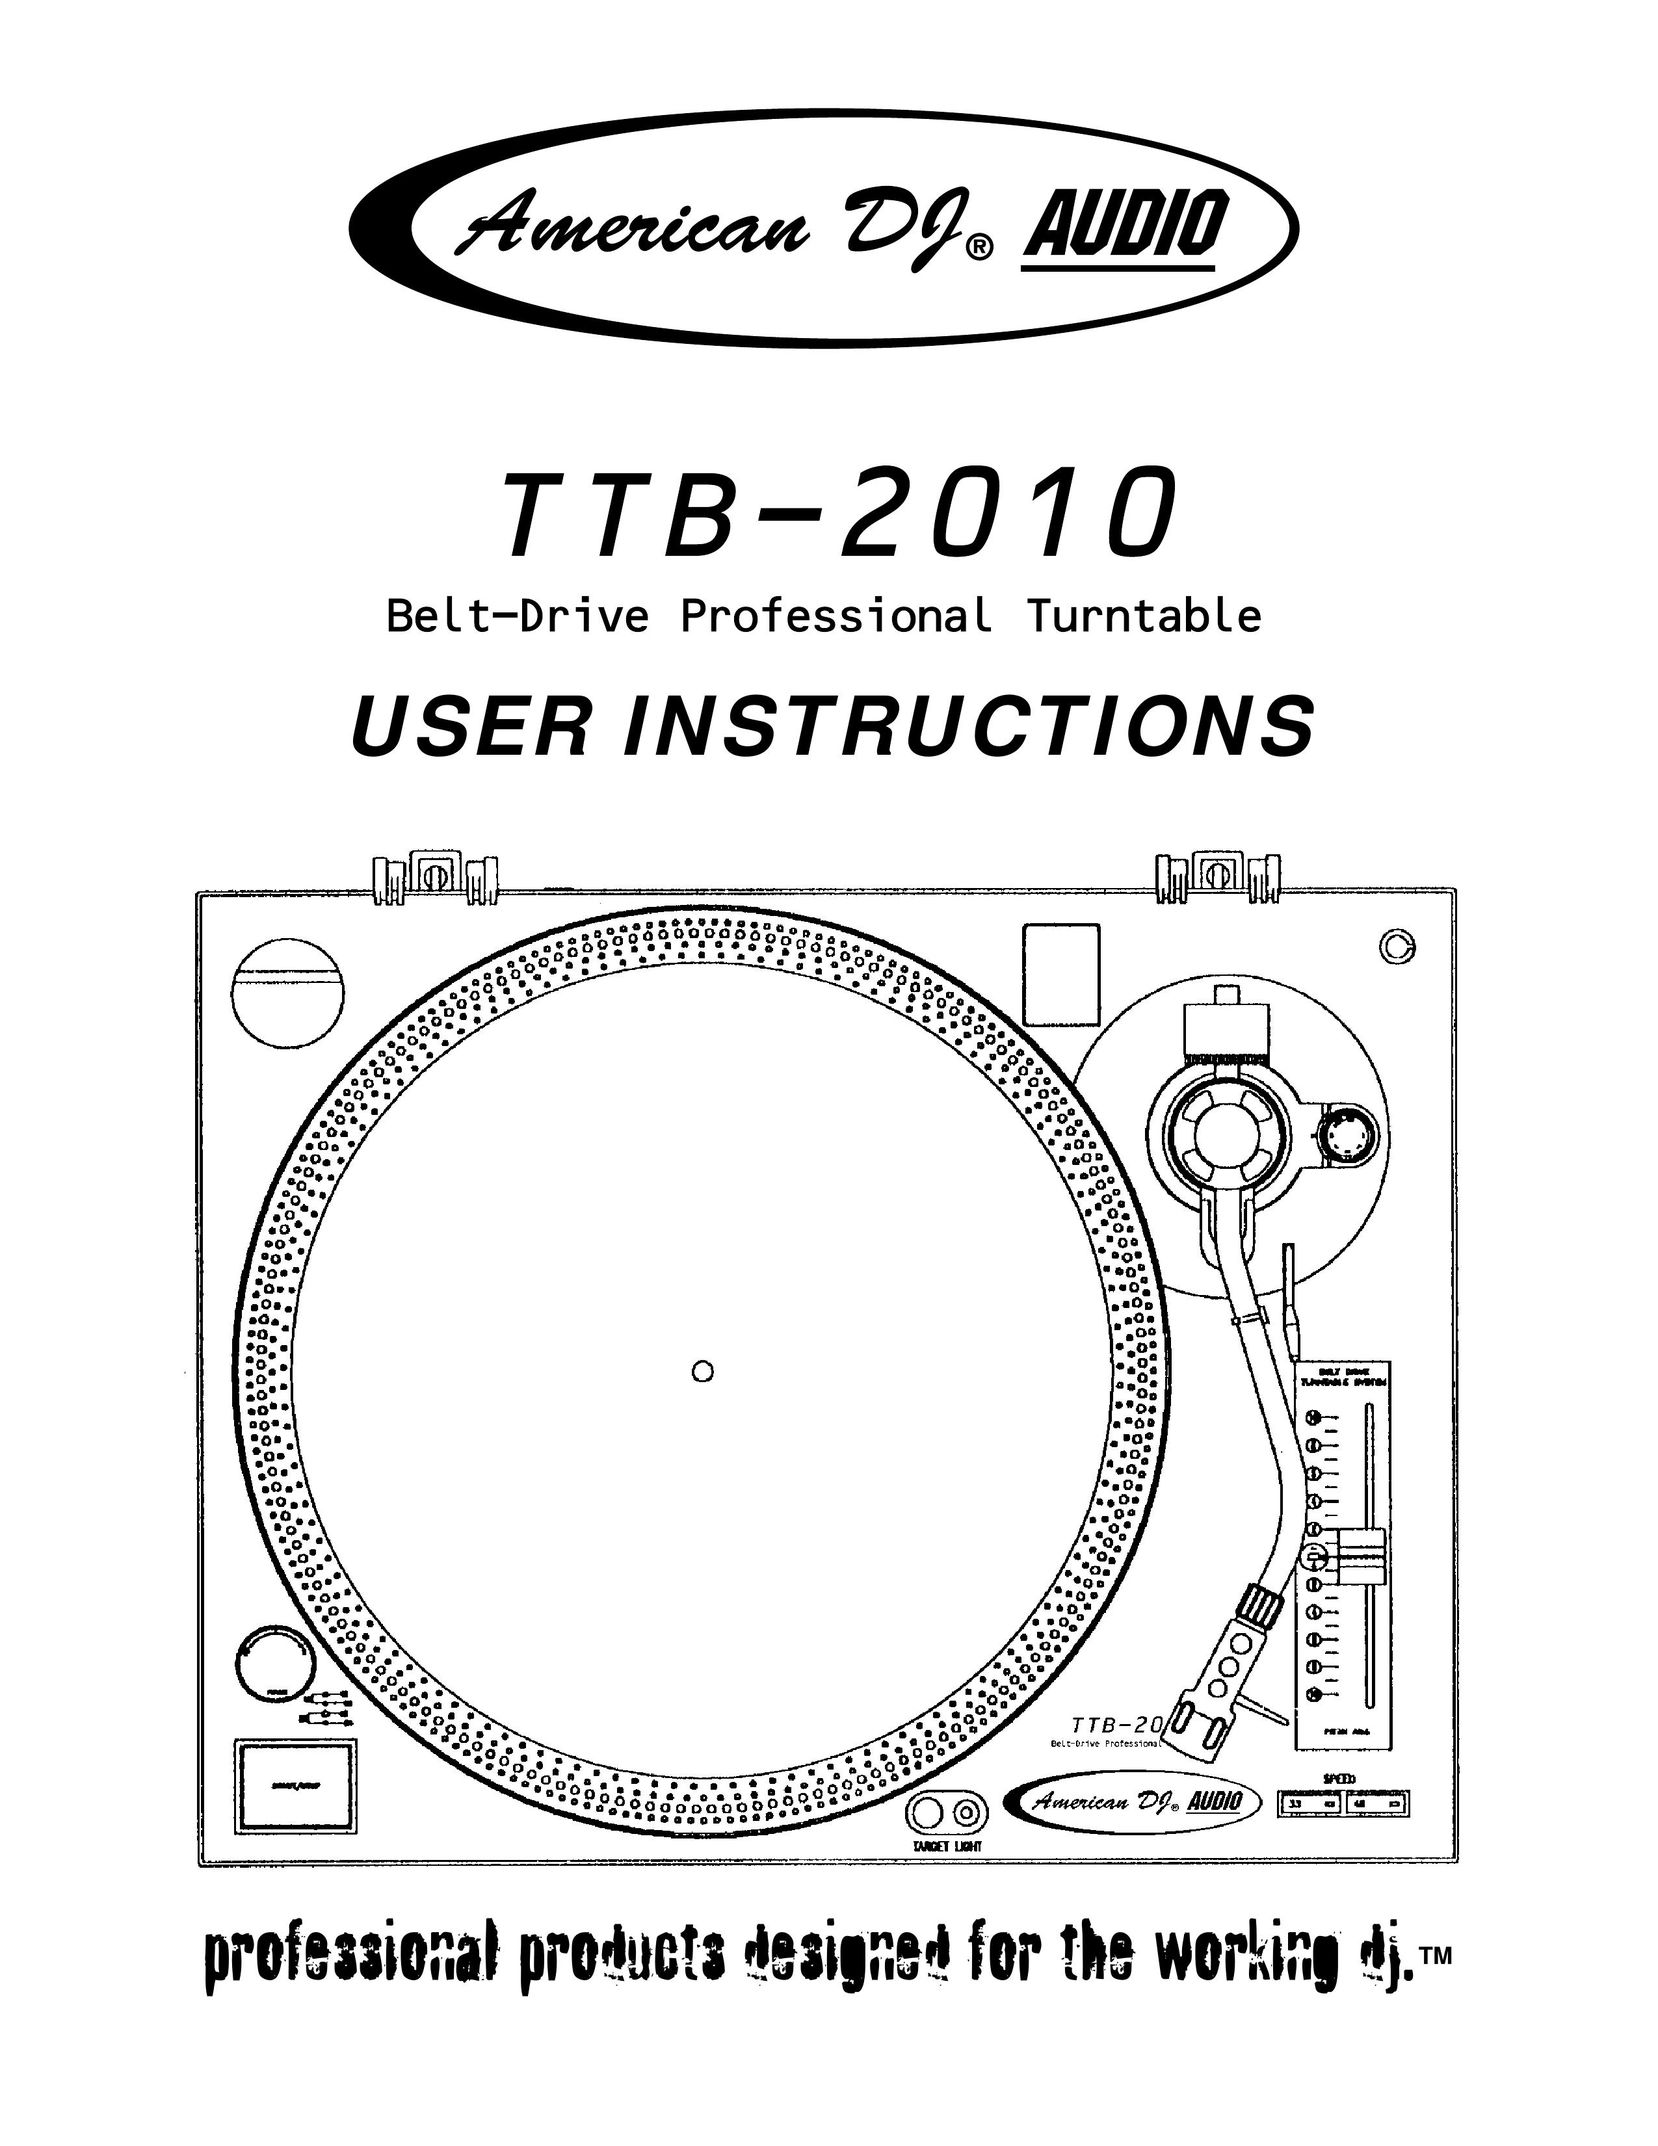 American Audio TTB-2010 Turntable User Manual